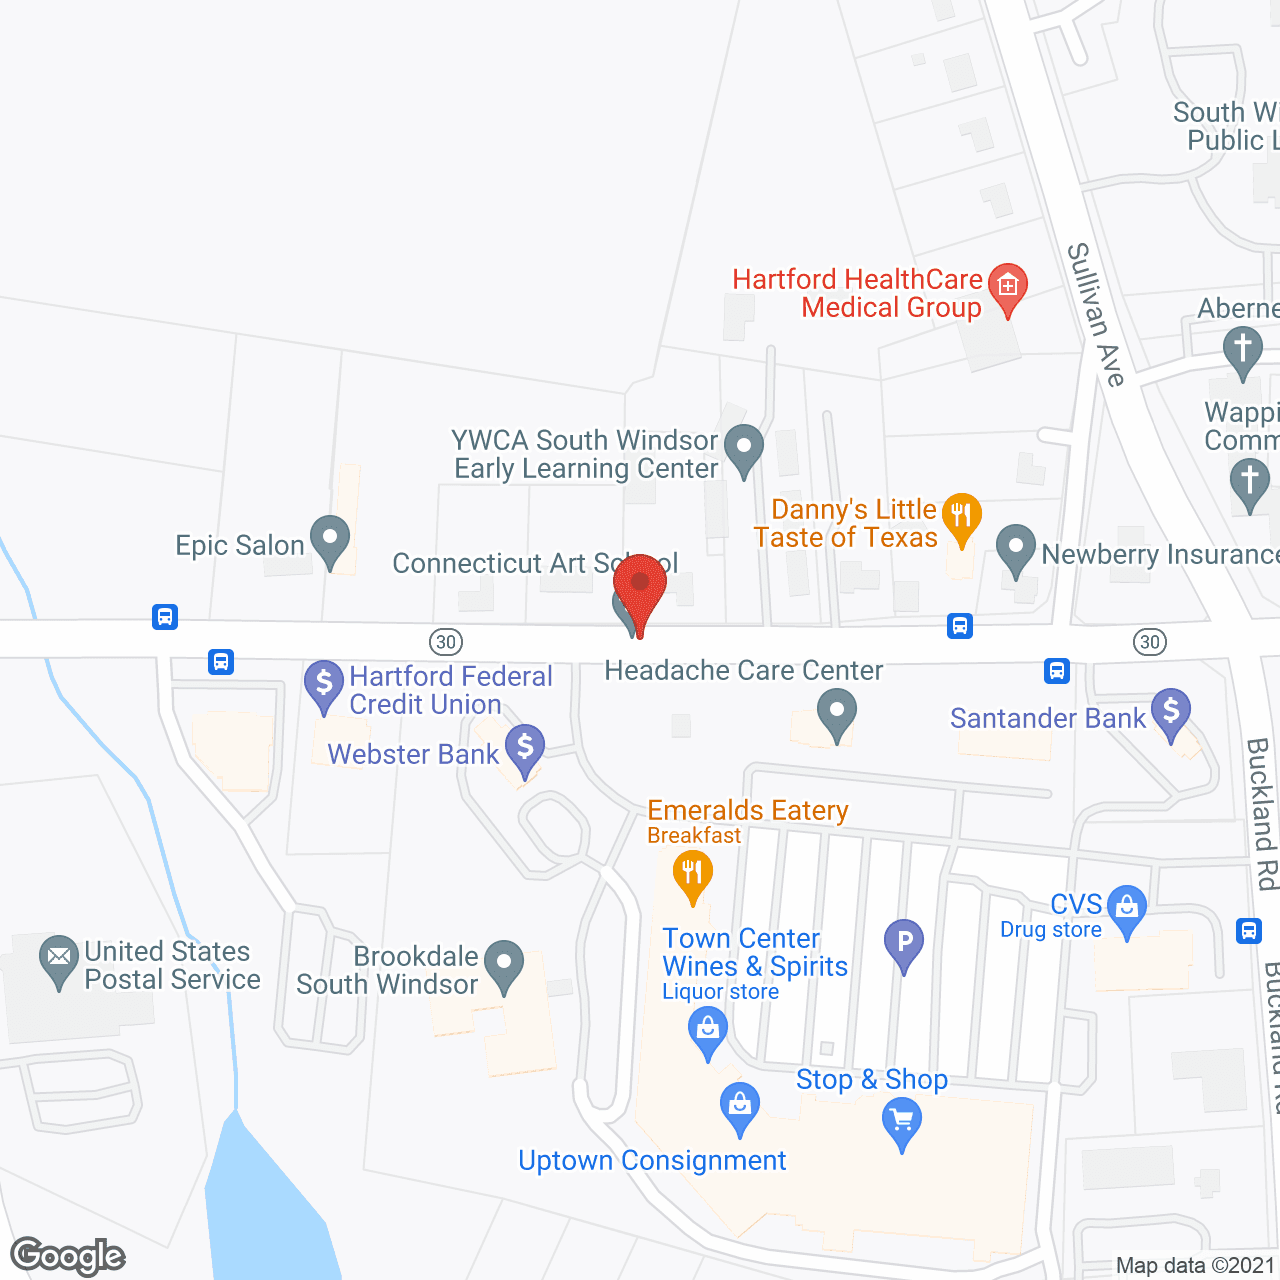 Brookdale South Windsor in google map